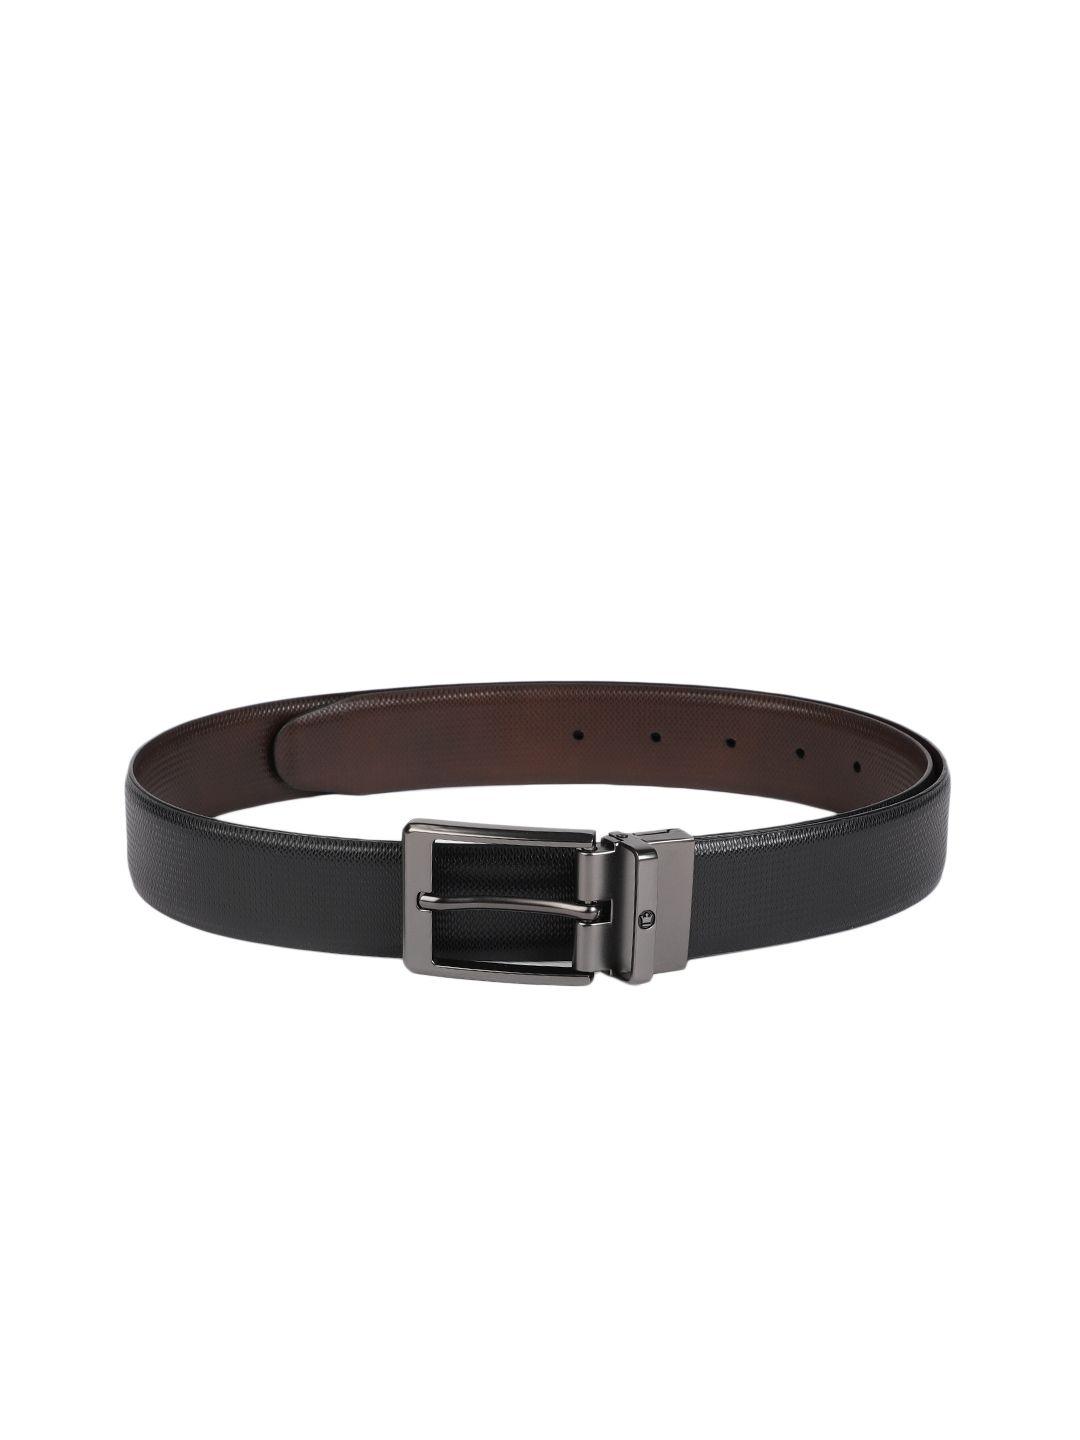 louis philippe men black & brown reversible leather belt